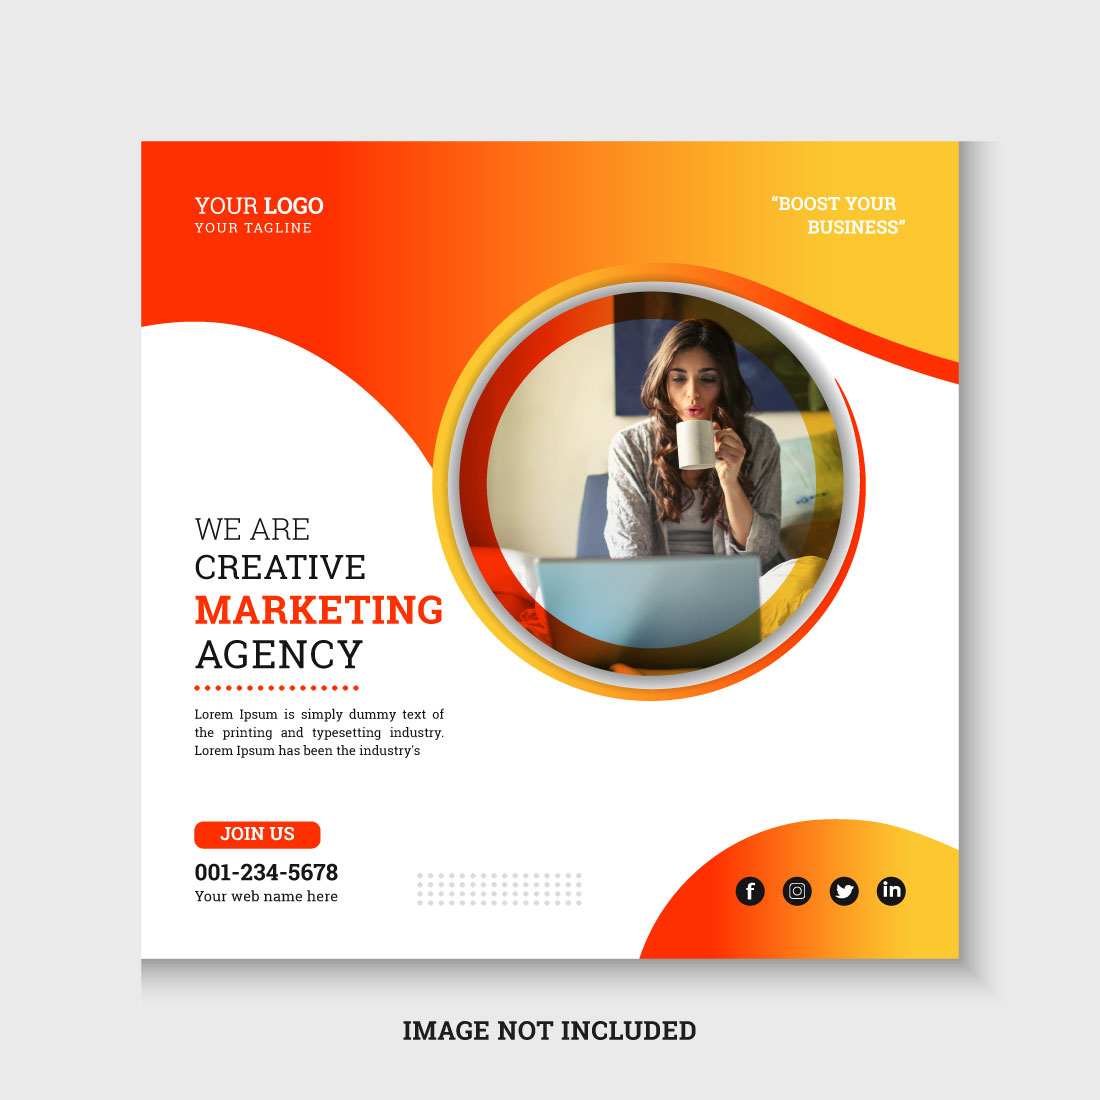 Digital marketing agency social media and instagram post design template cover image.